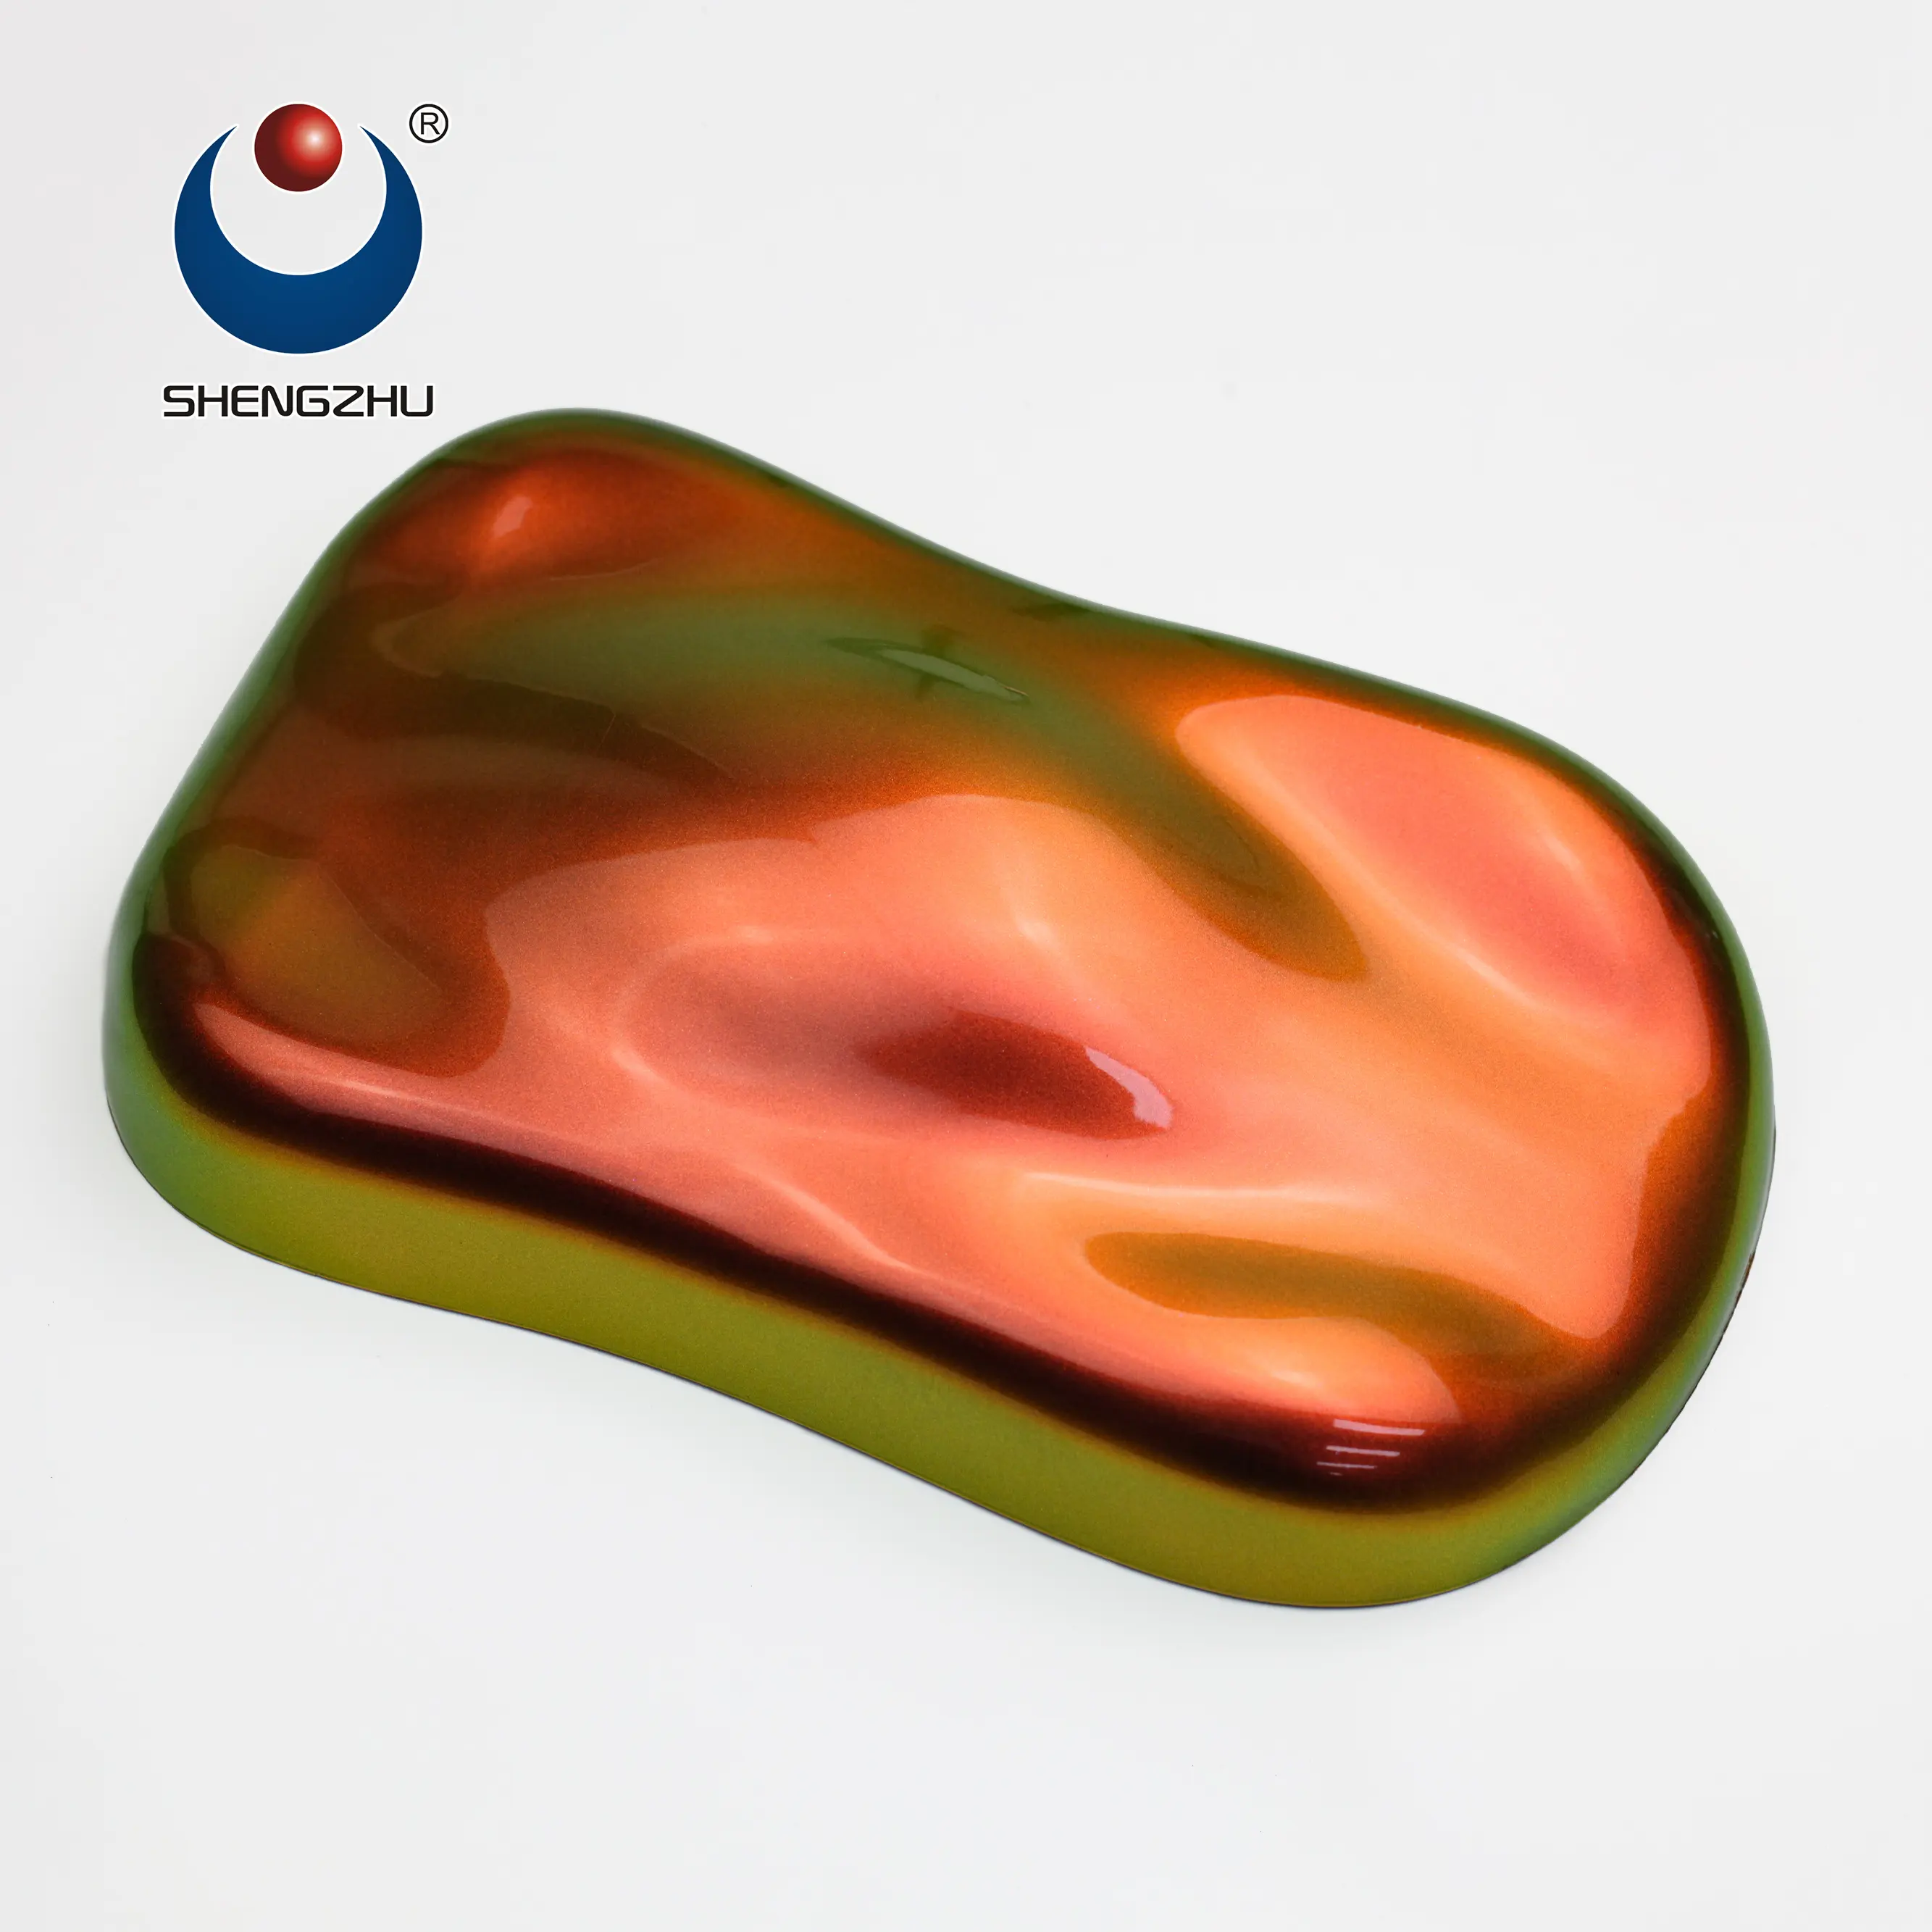 Shengzhu G9 Sersiliconer Shifting Chameleon Pigment verniciatura a polvere Sikkens per vernice per auto Yatu Easicoat vernice per auto entro 3 giorni